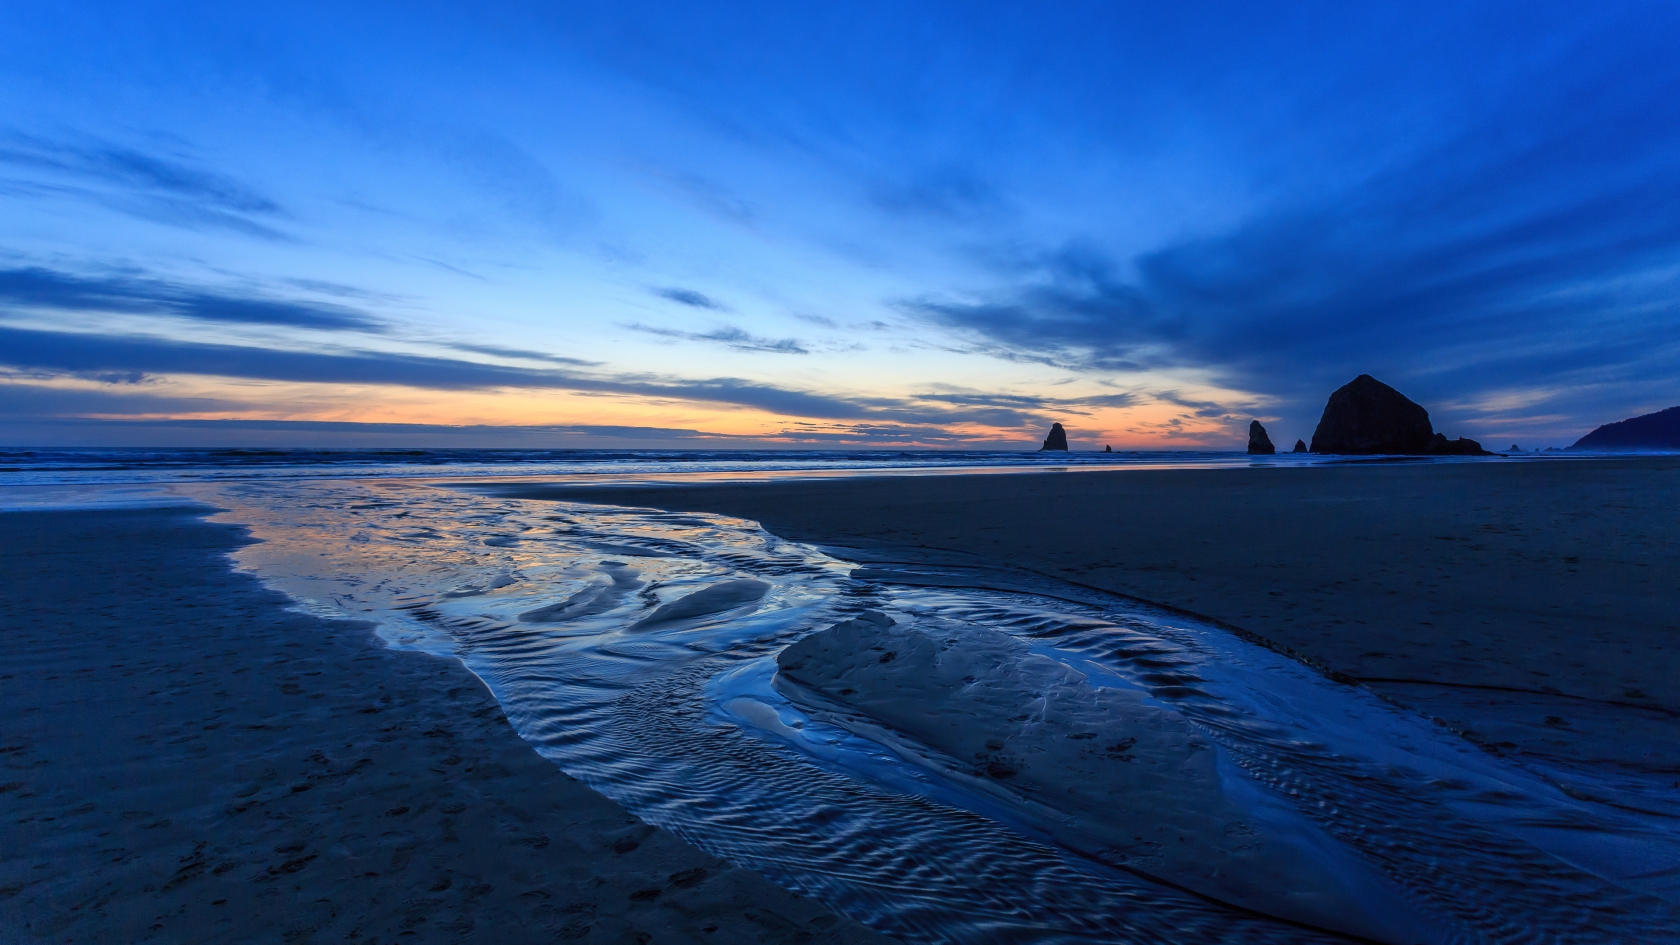 Sunset Oregon Beach for 1680 x 945 HDTV resolution